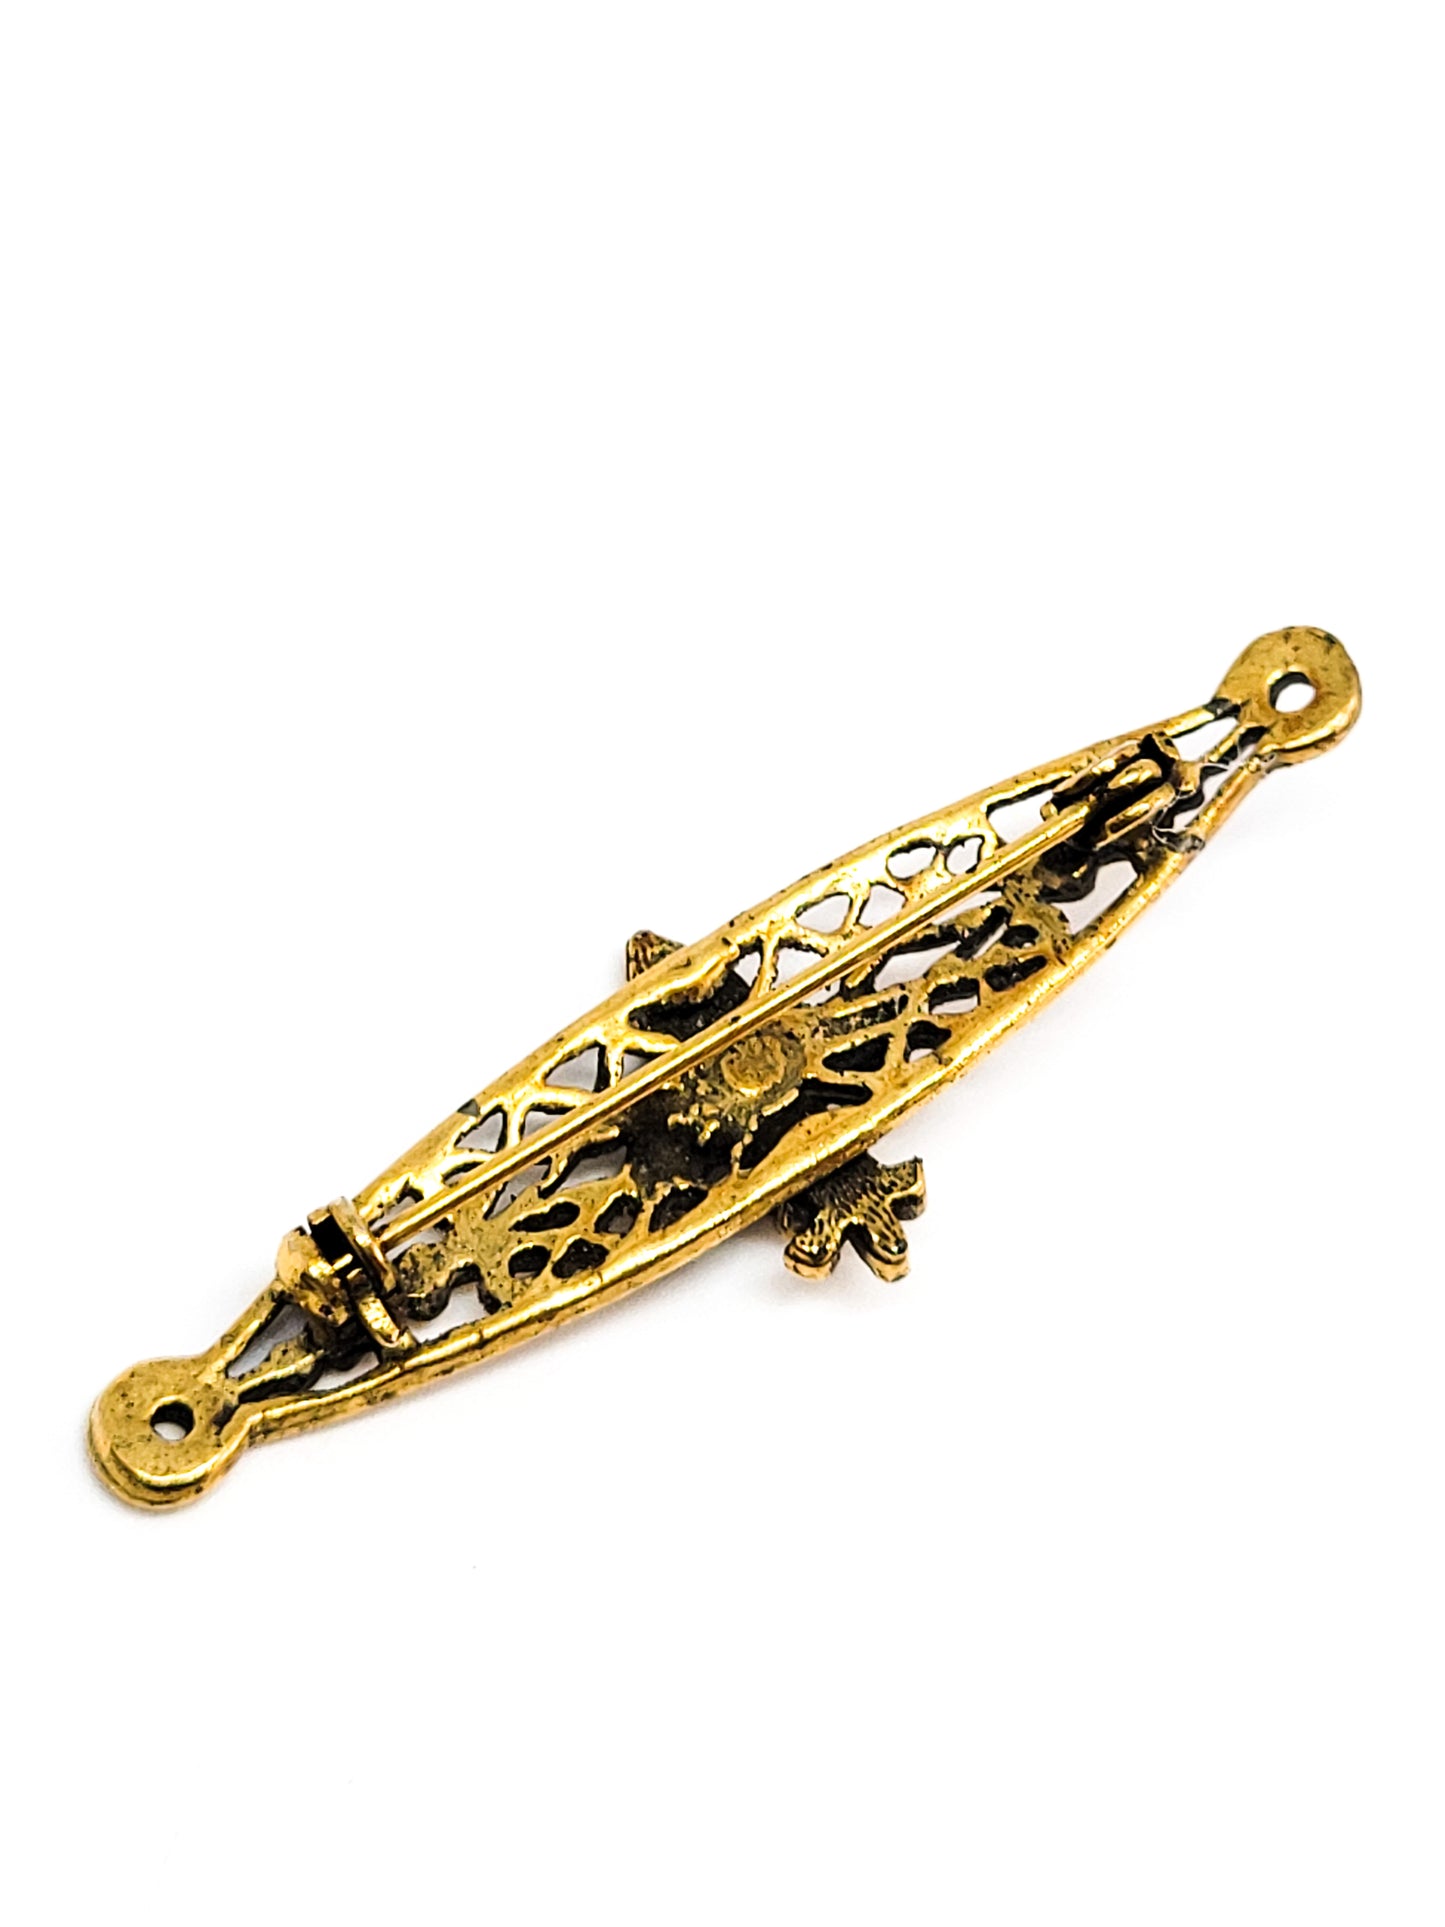 Flur de lis vintage gold toned faux pearl and rhinestone bar pin brooch